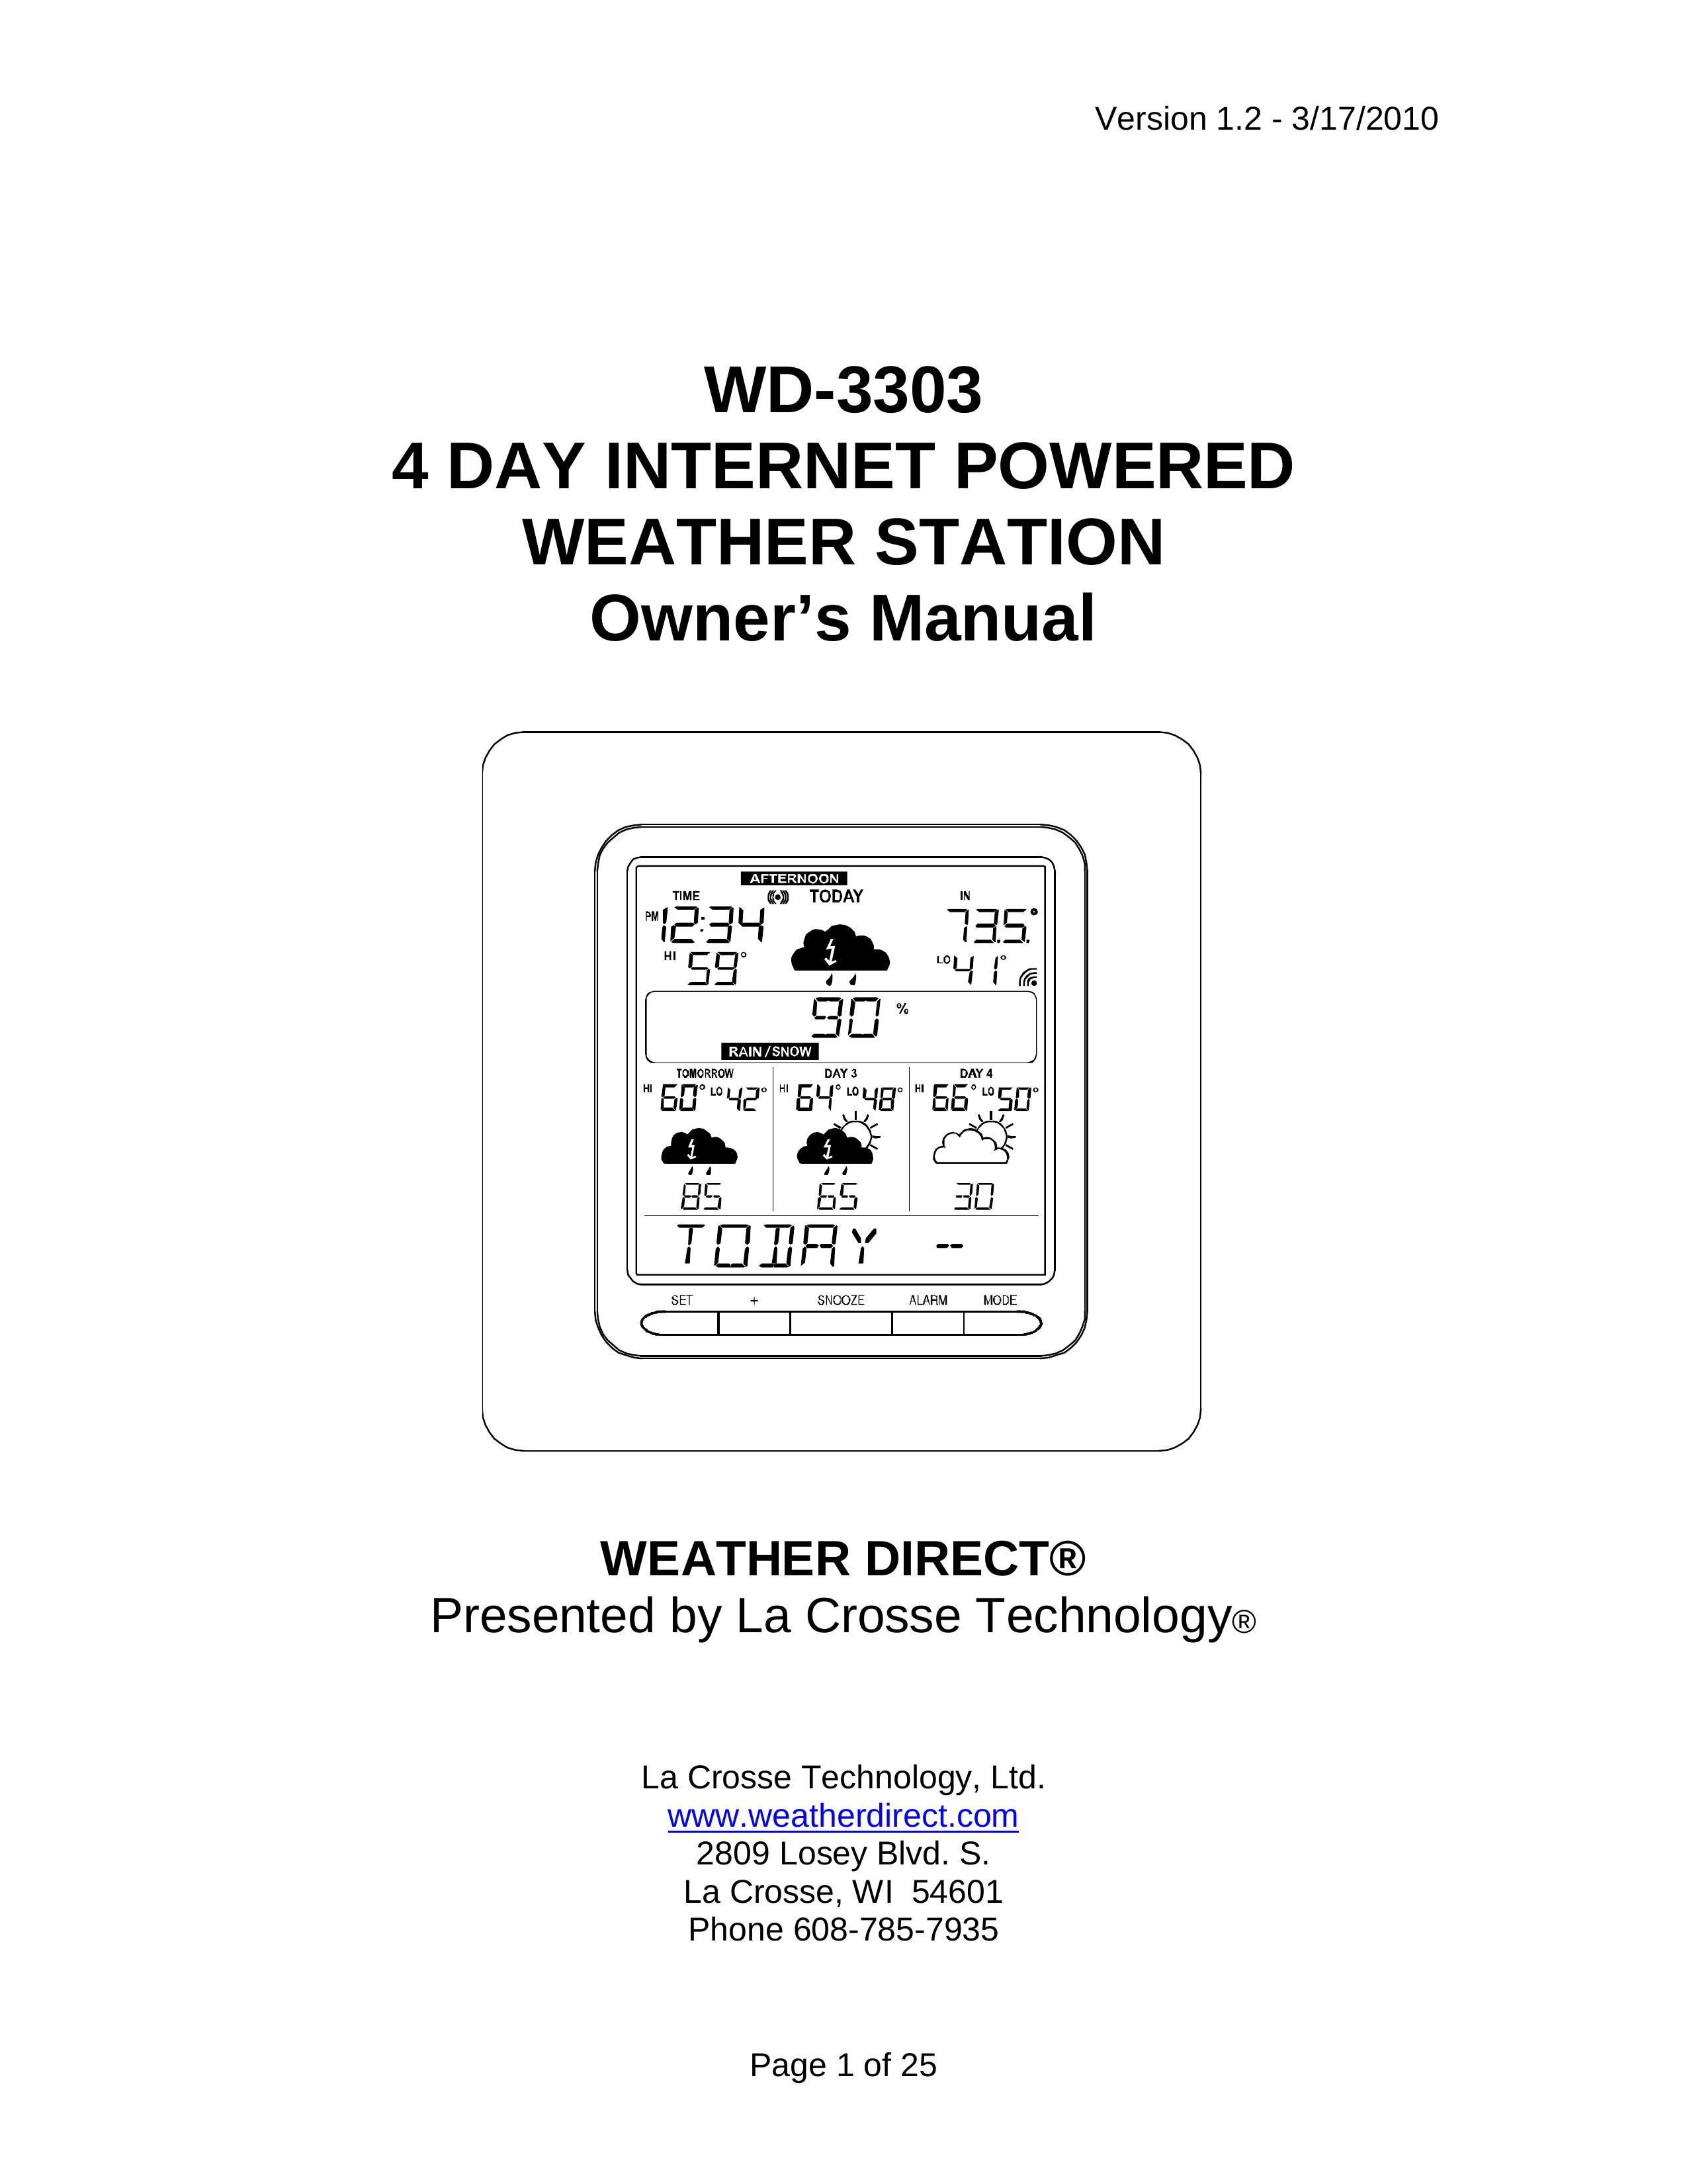 La Crosse Technology WD-3303 Weather Radio User Manual